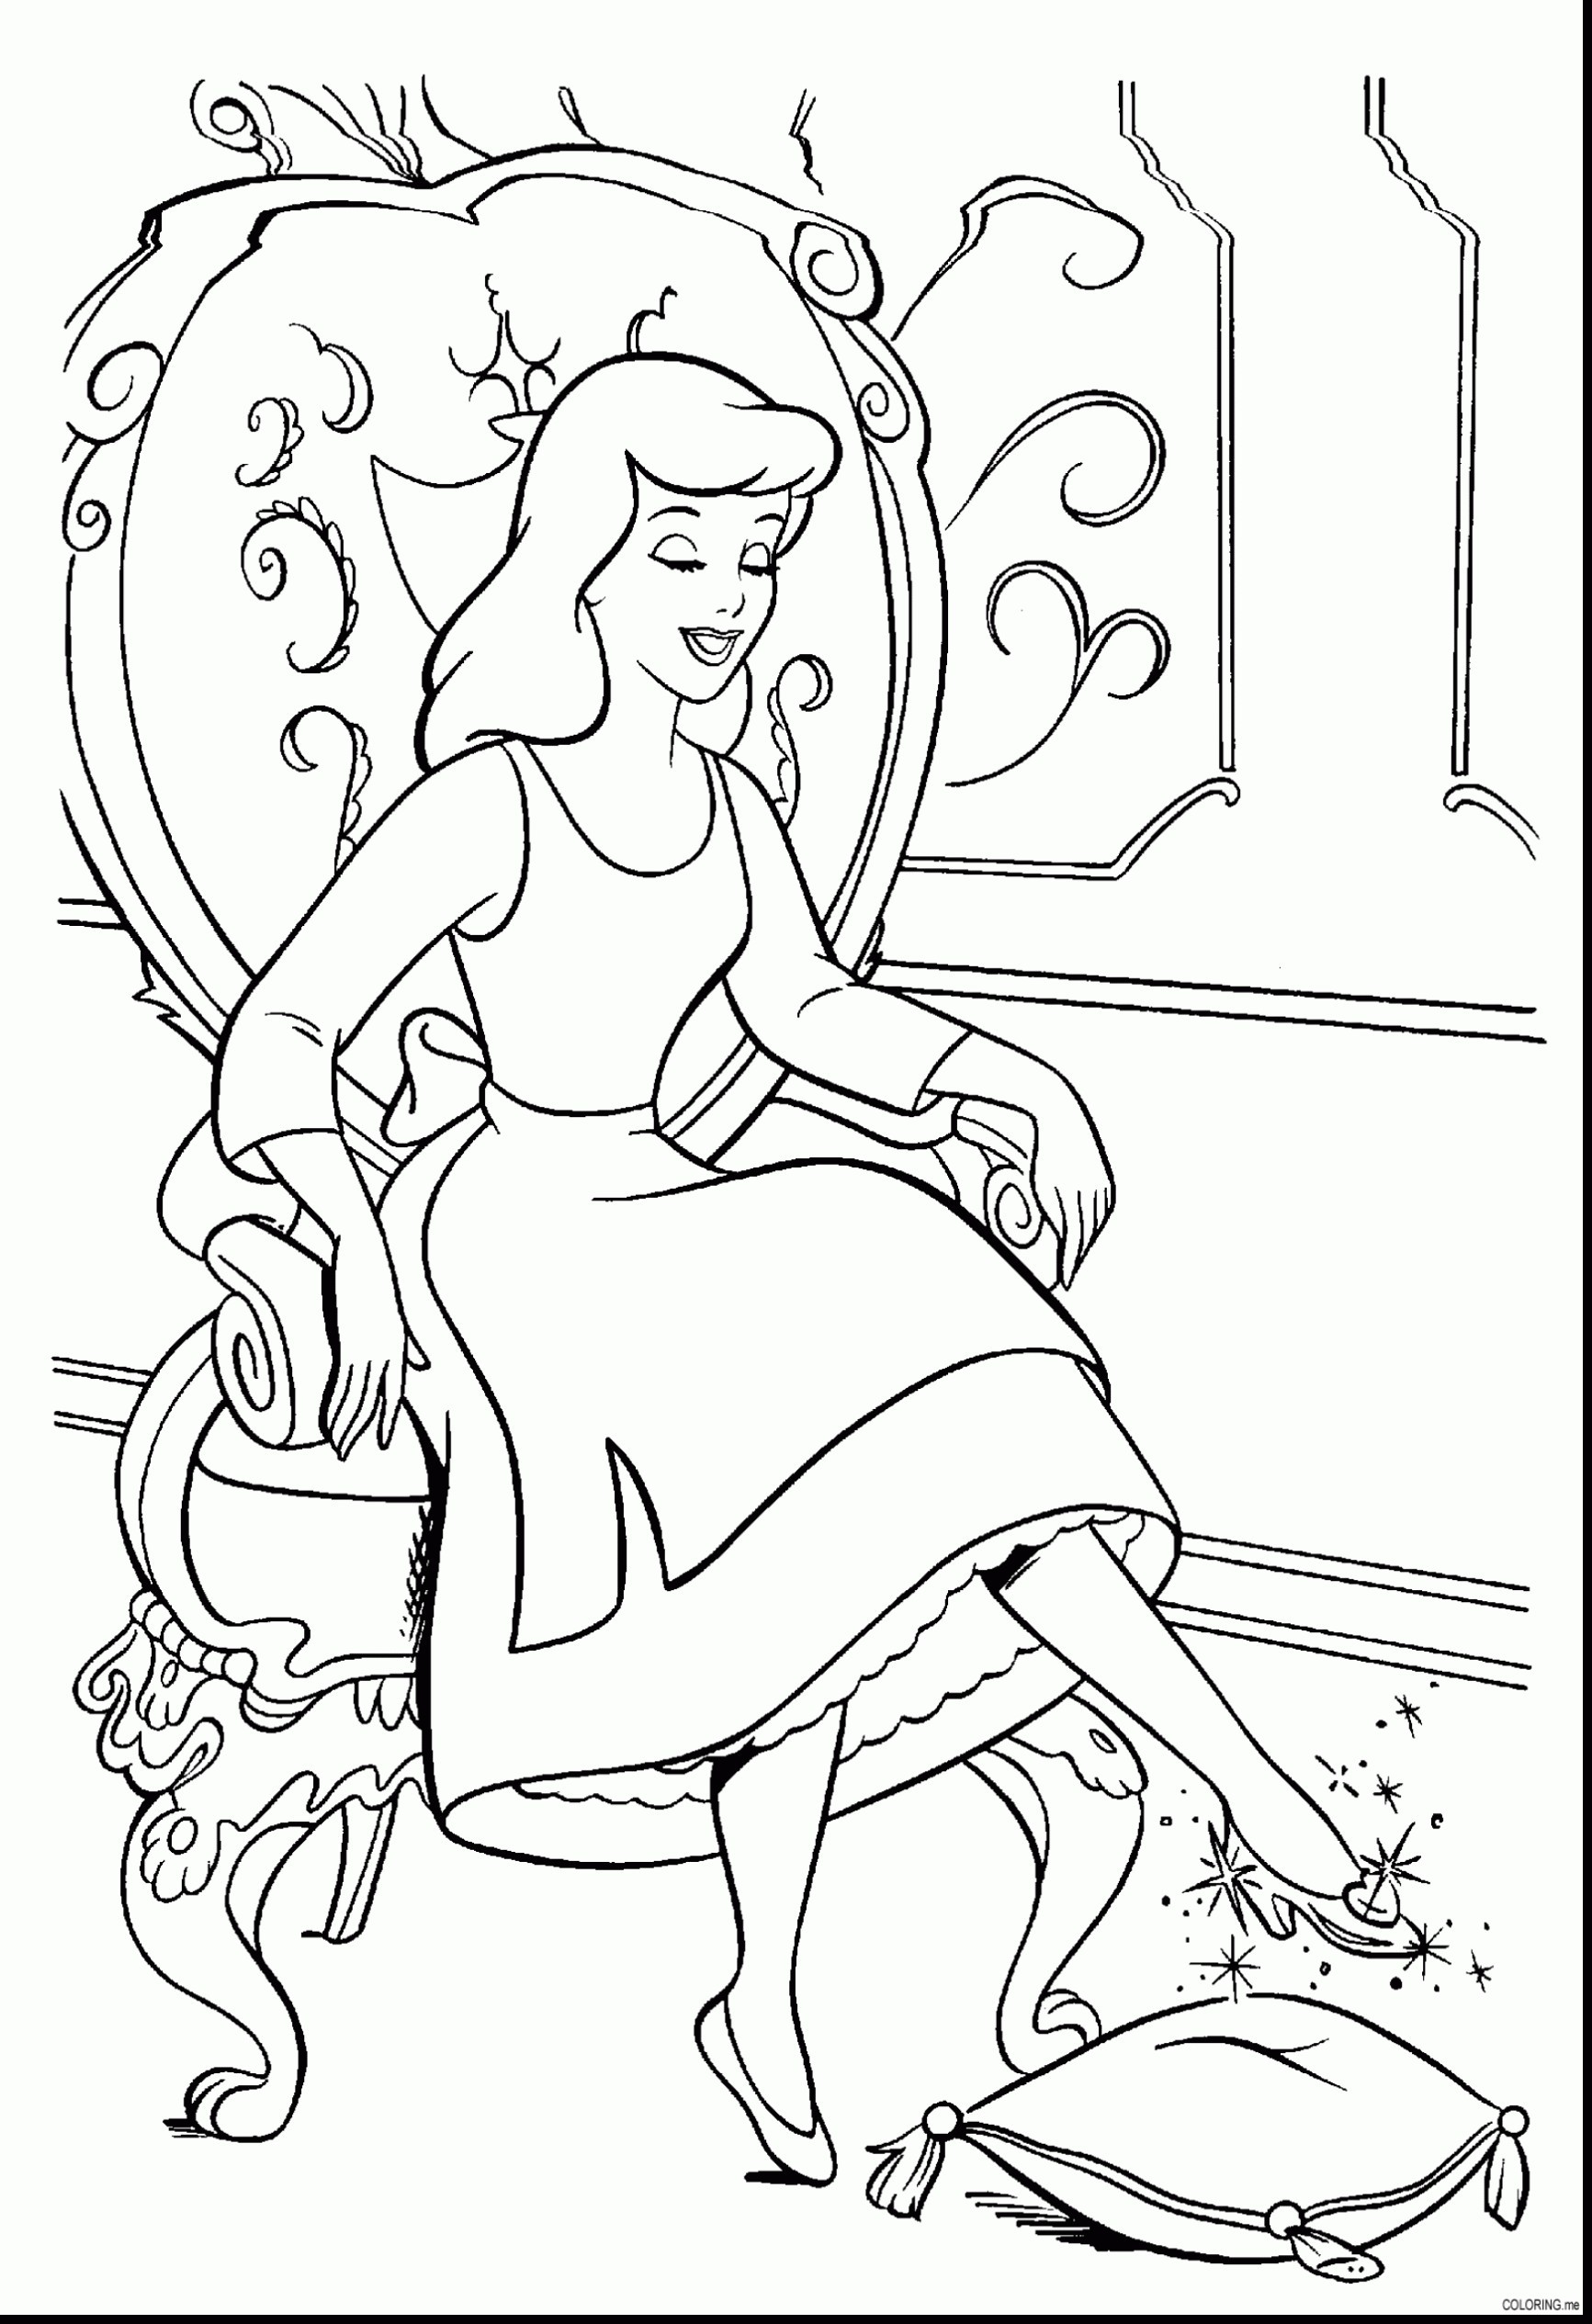 Cinderella Coloring Pages Disney at Free printable